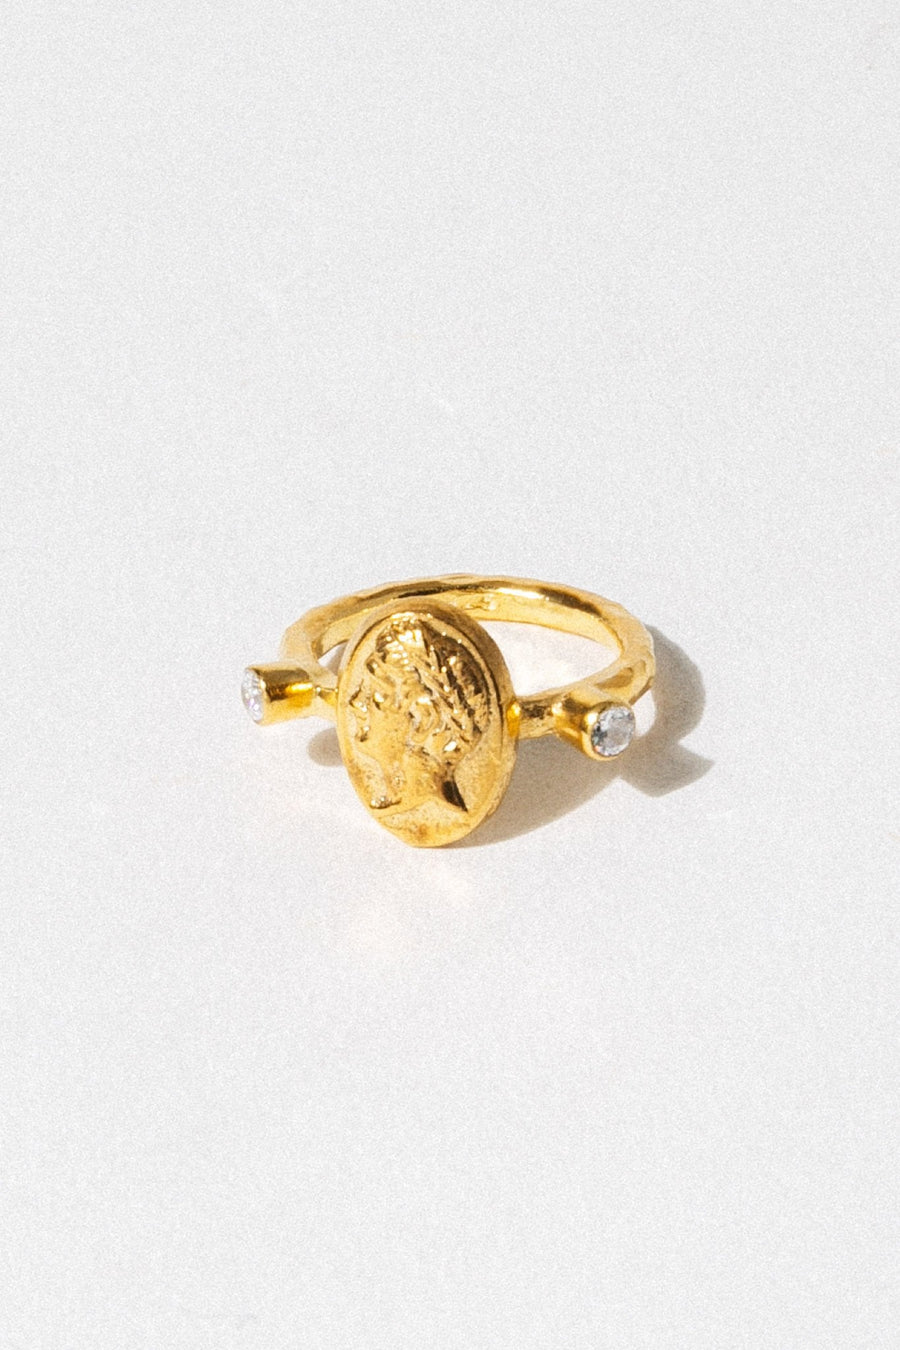 CAPRIXUS Jewelry US 6 / Gold Apollo Signet Ring